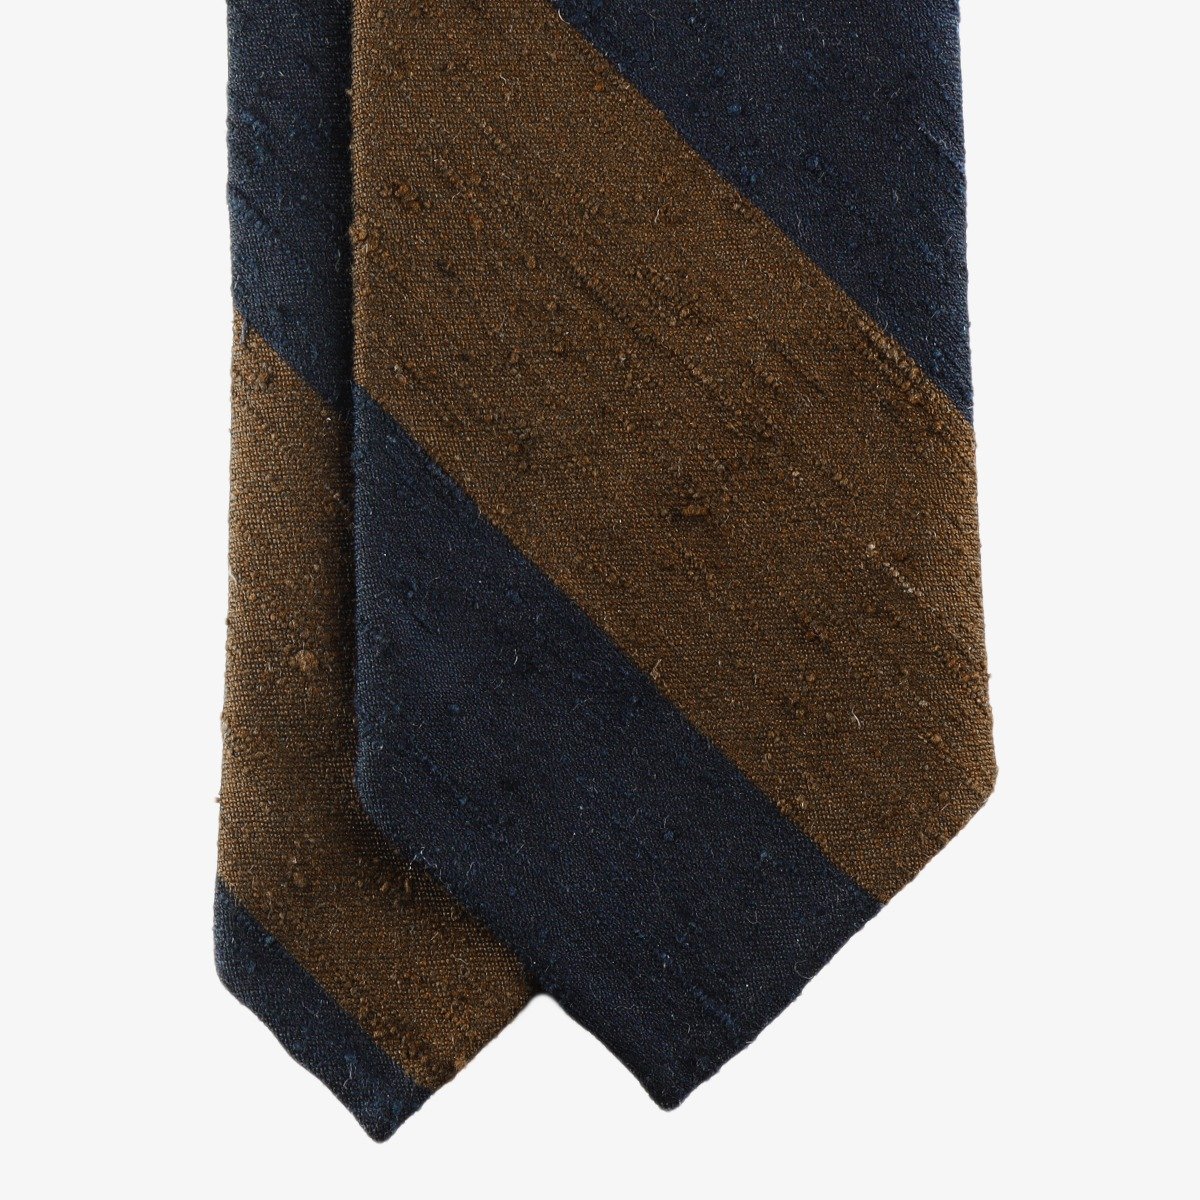 Shibumi Firenze navy and brown block stripe shantung silk tie